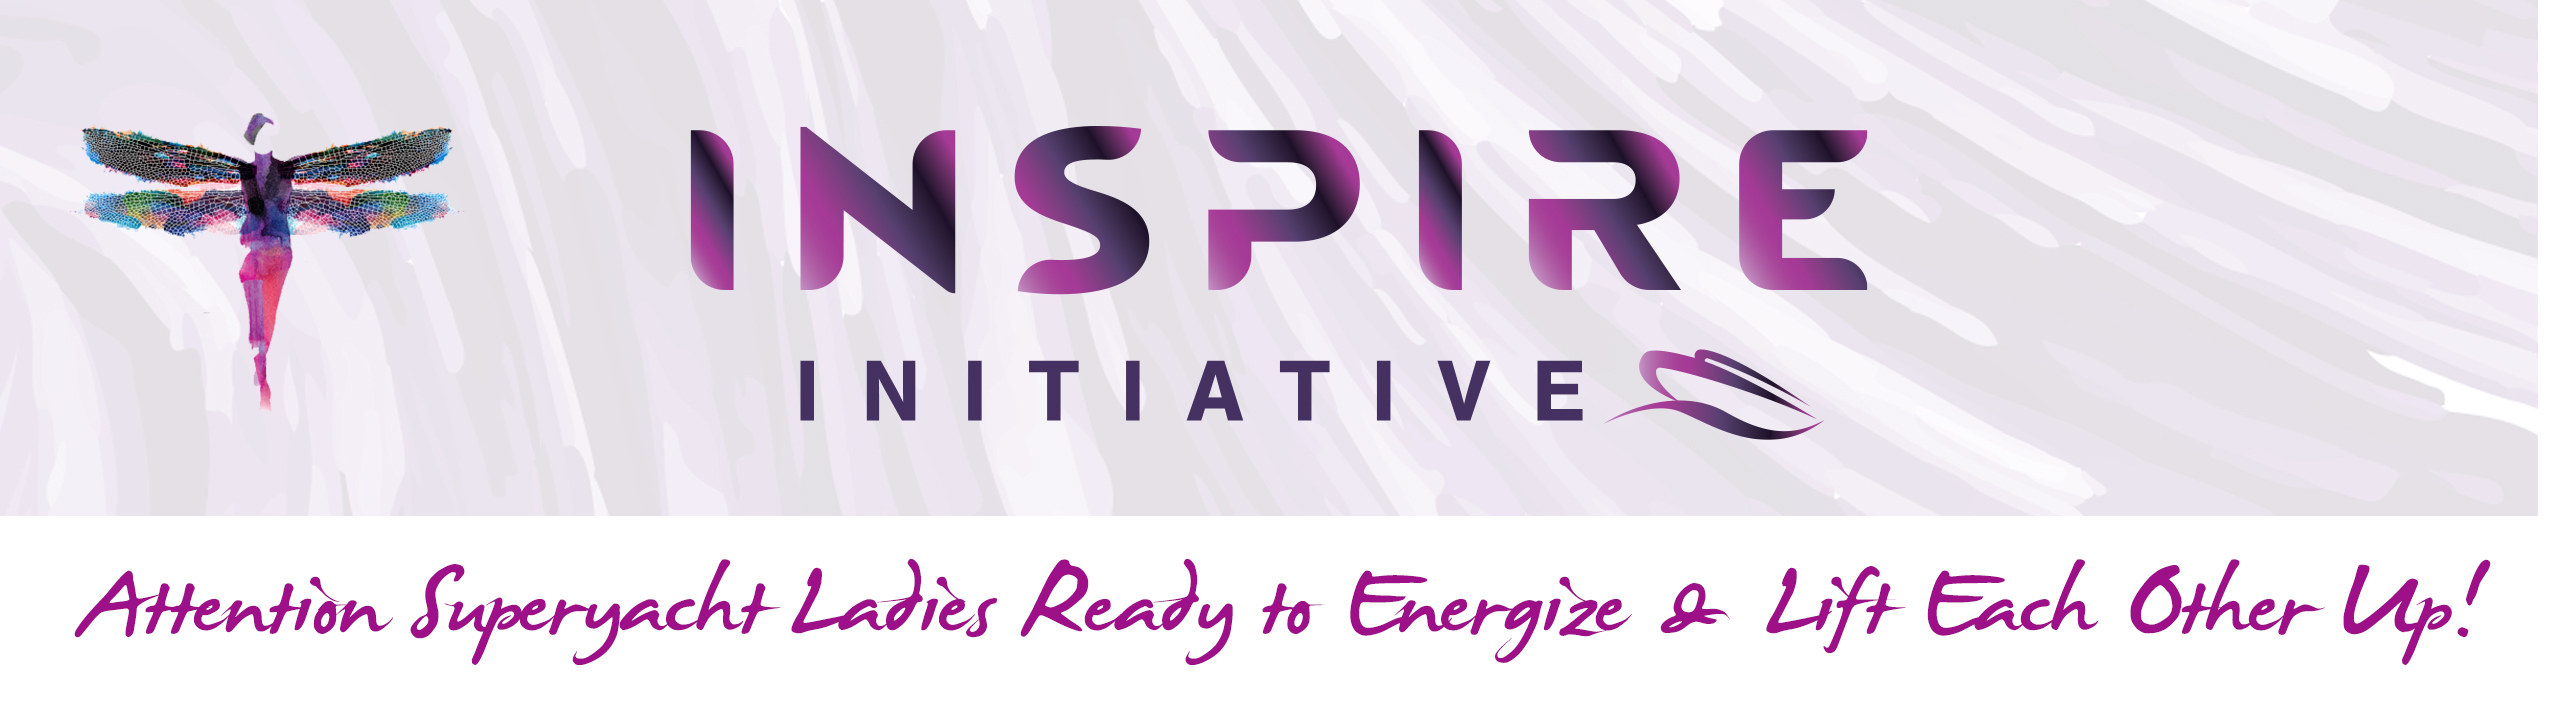 Inspire Initiative Header